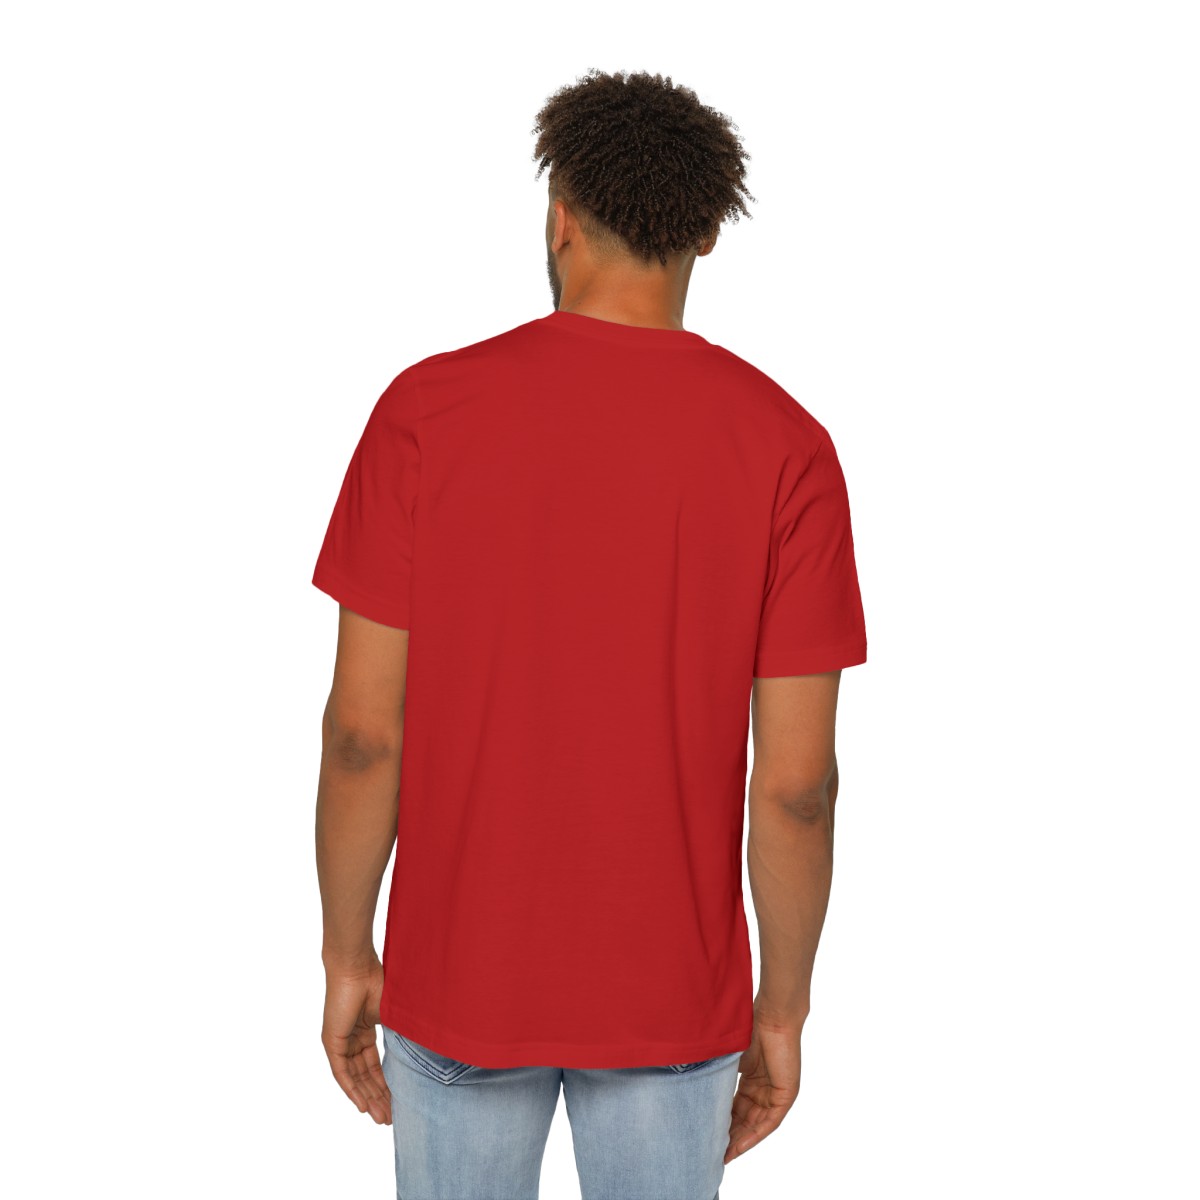 Dallah Radio Unisex Short-Sleeve Jersey T-Shirt product thumbnail image